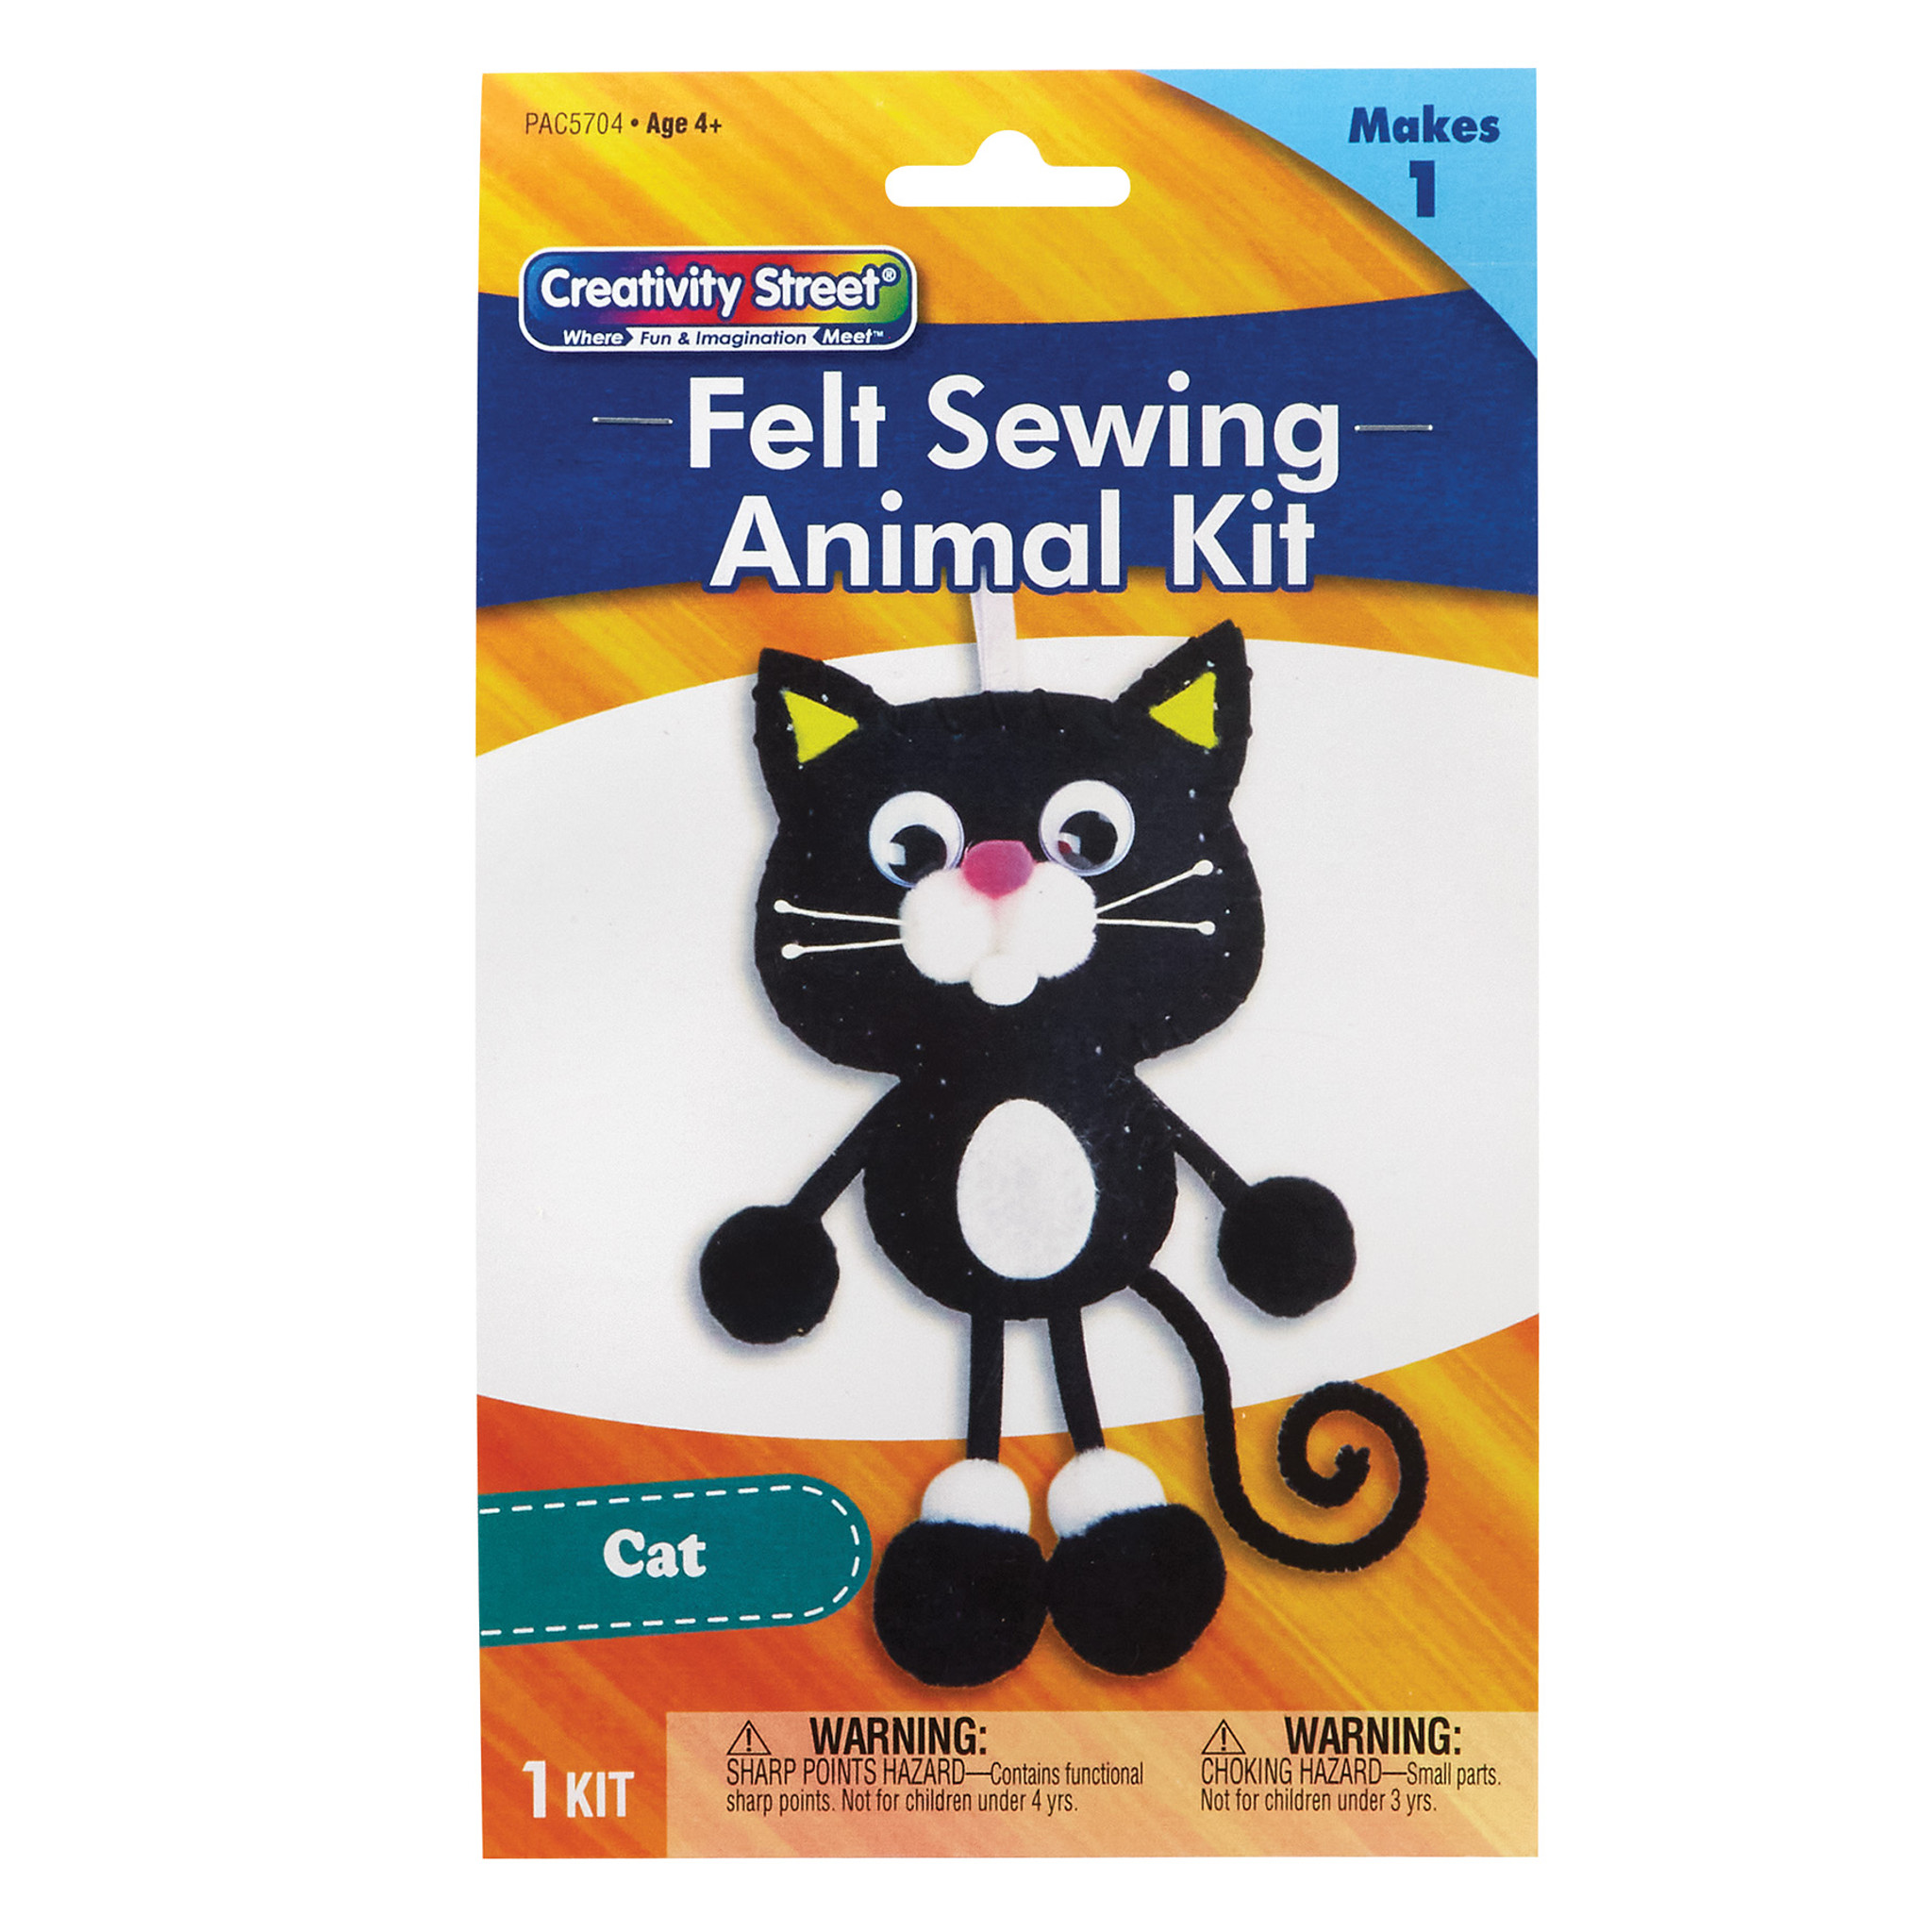 Felt Sewing Animal Kit, Giraffe, 6 X 11 X 0.75, 1 Kit